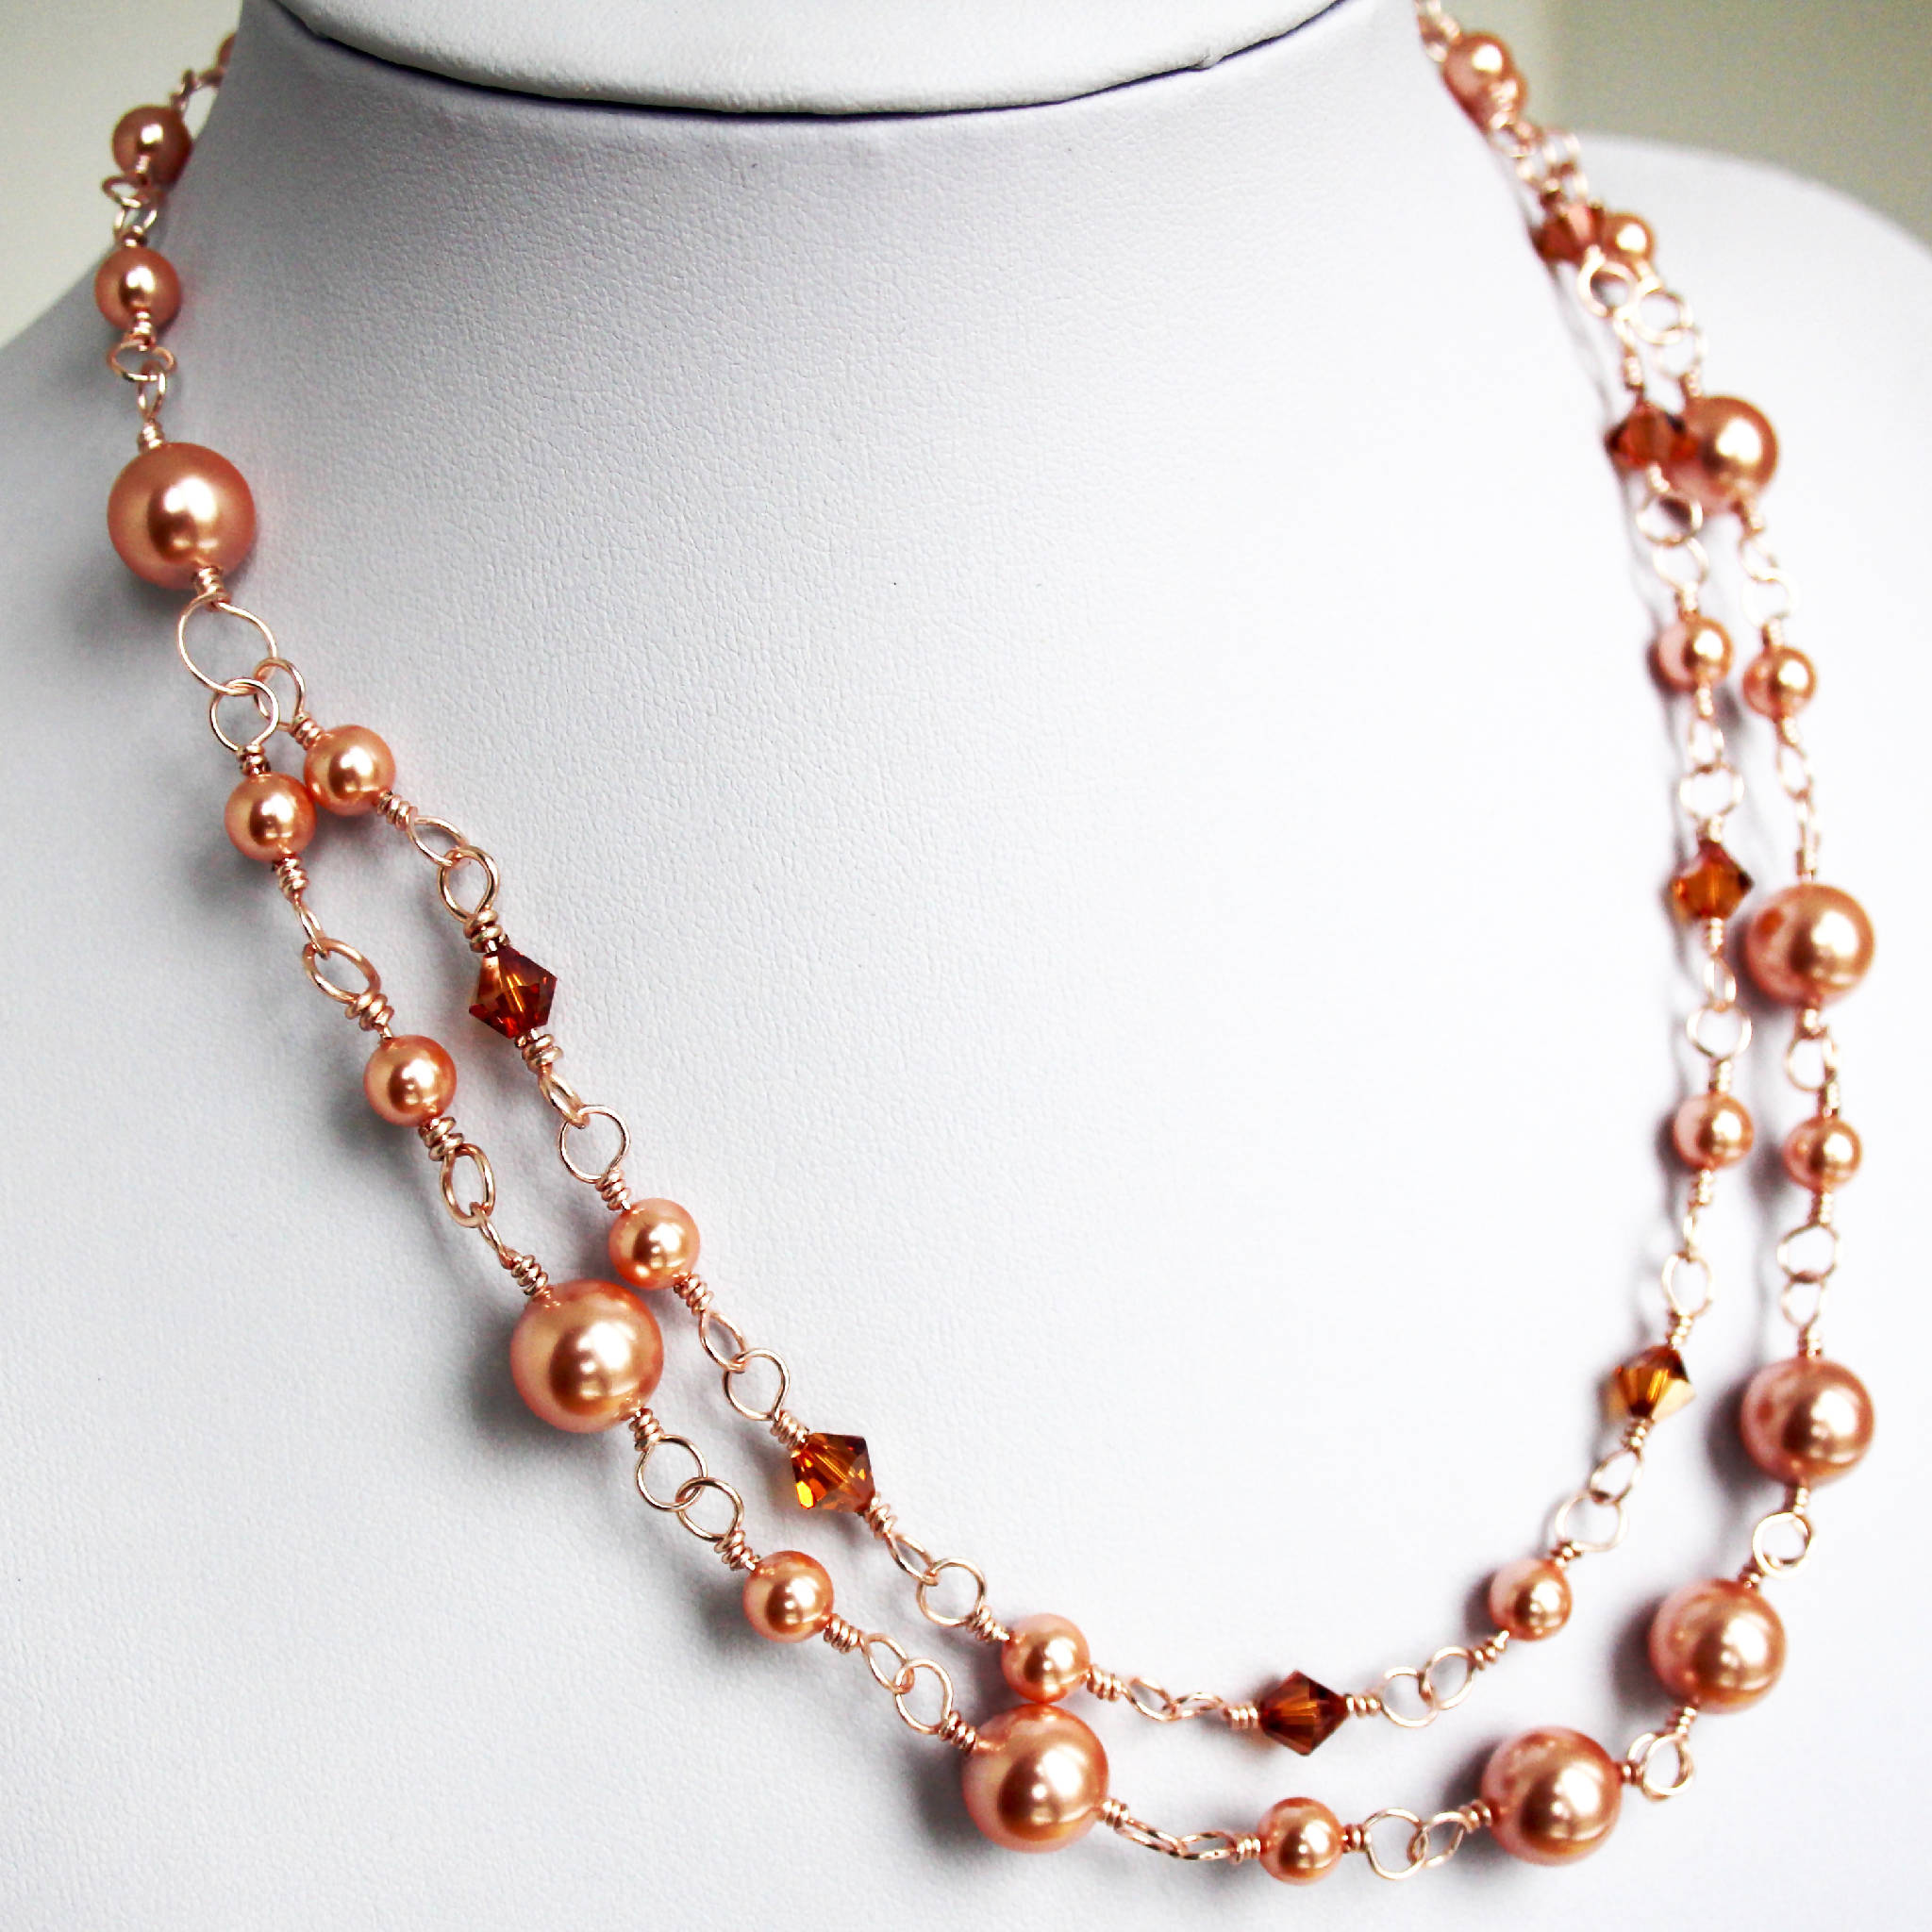 Swarovski Pearl & Crystal Necklace in Rose Gold (123)